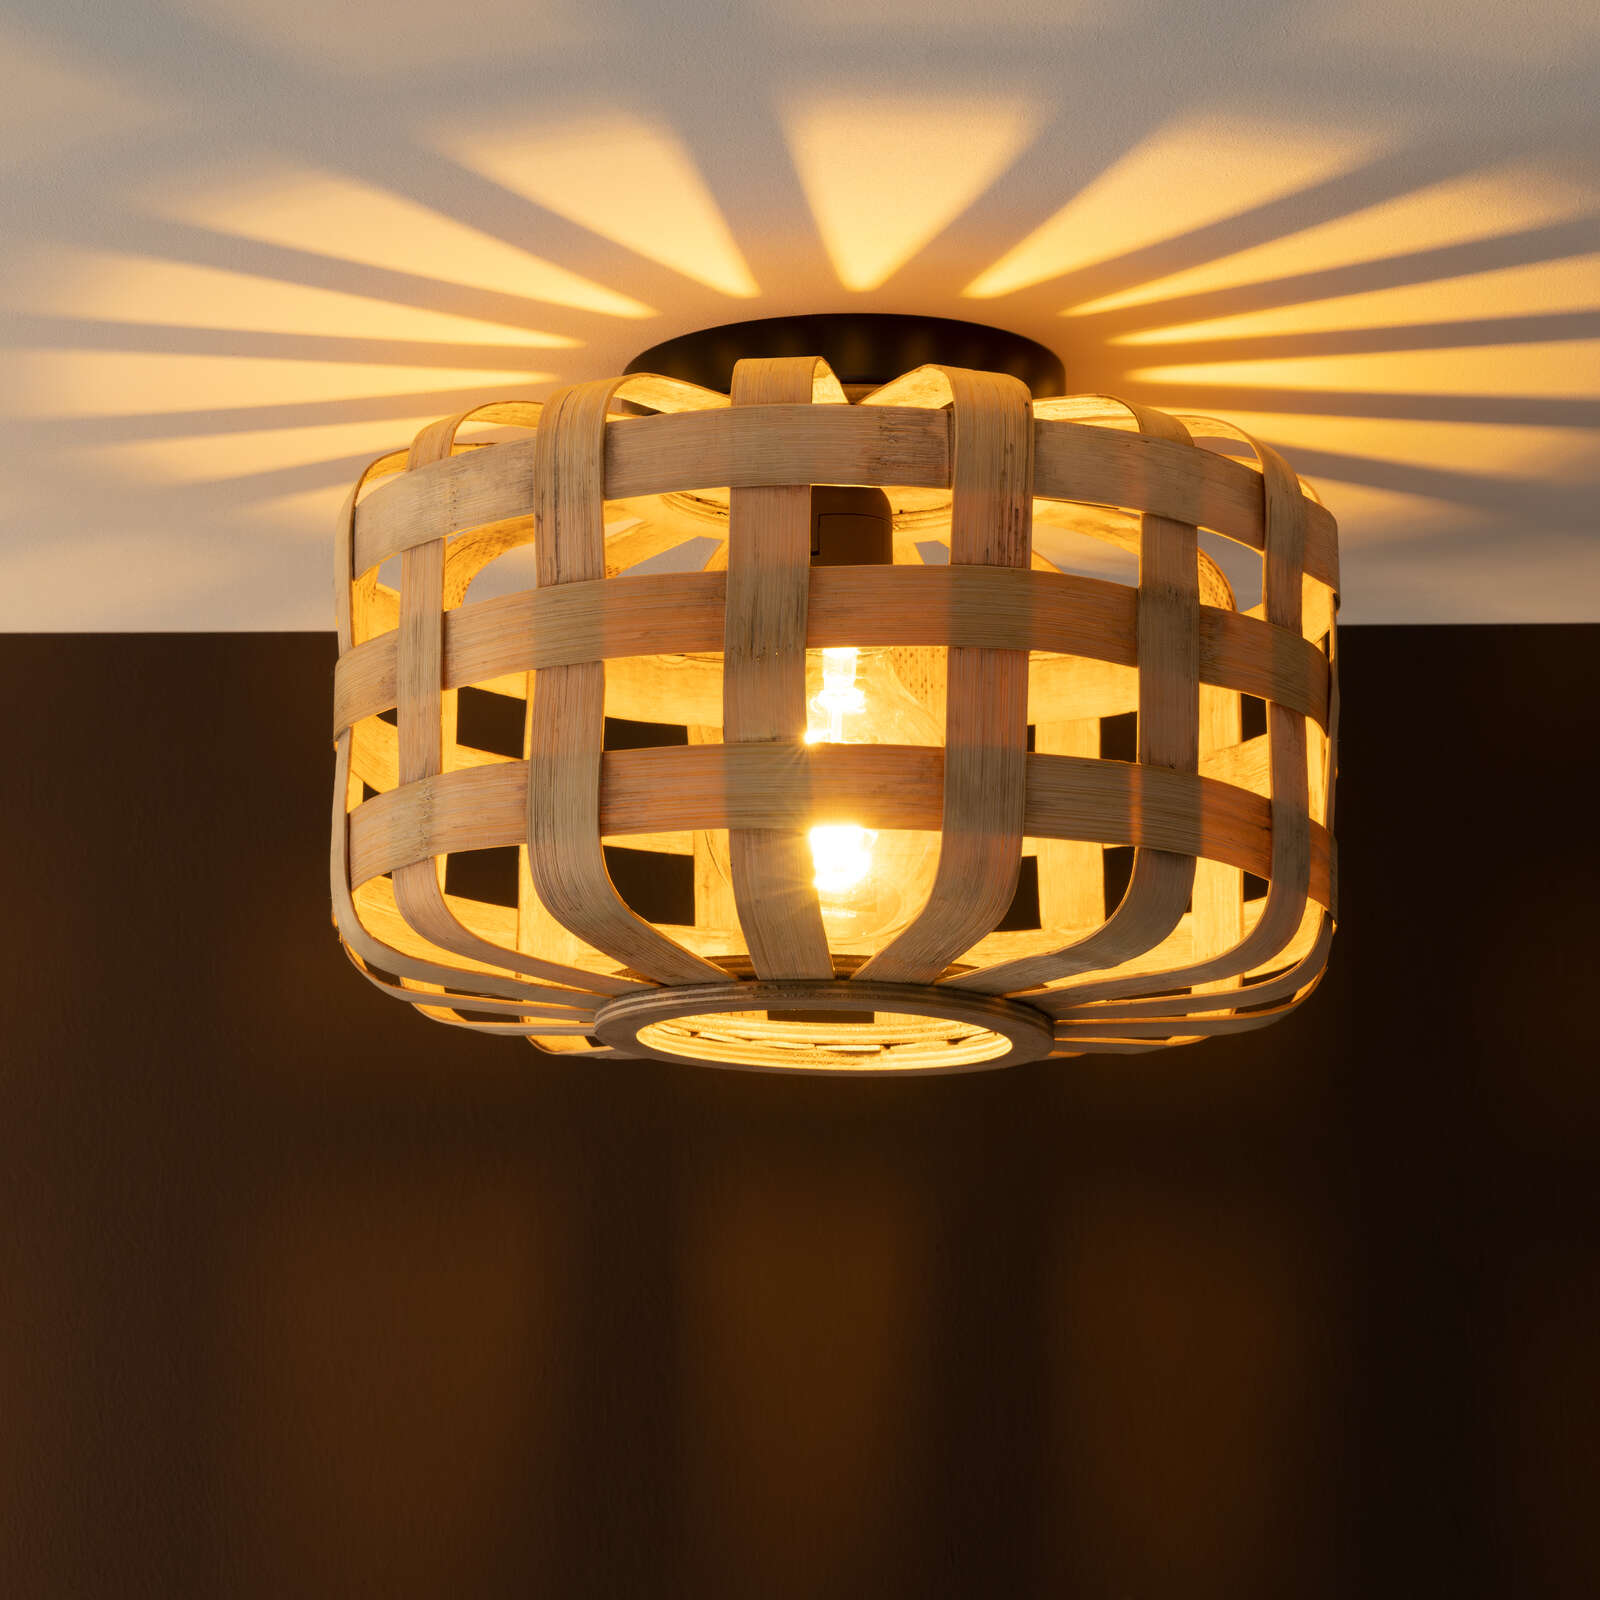             Bamboe plafondlamp - Wilhelm 2 - Bruin
        